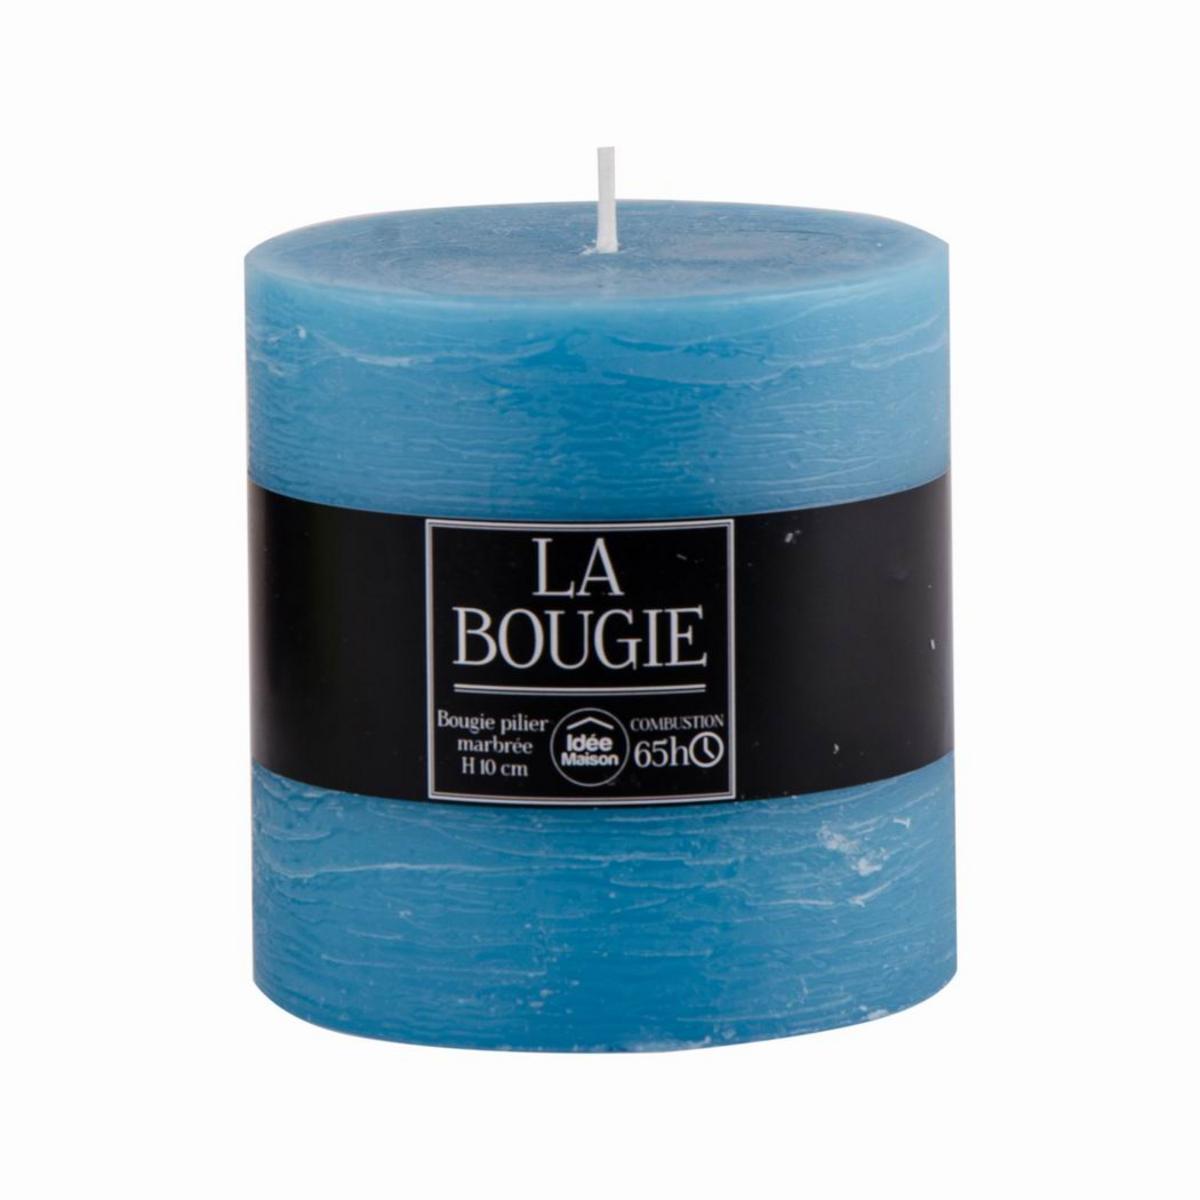 Bougie cylindrique marbrée - Paraffine - Ø 10 x H 10 cm - Bleu